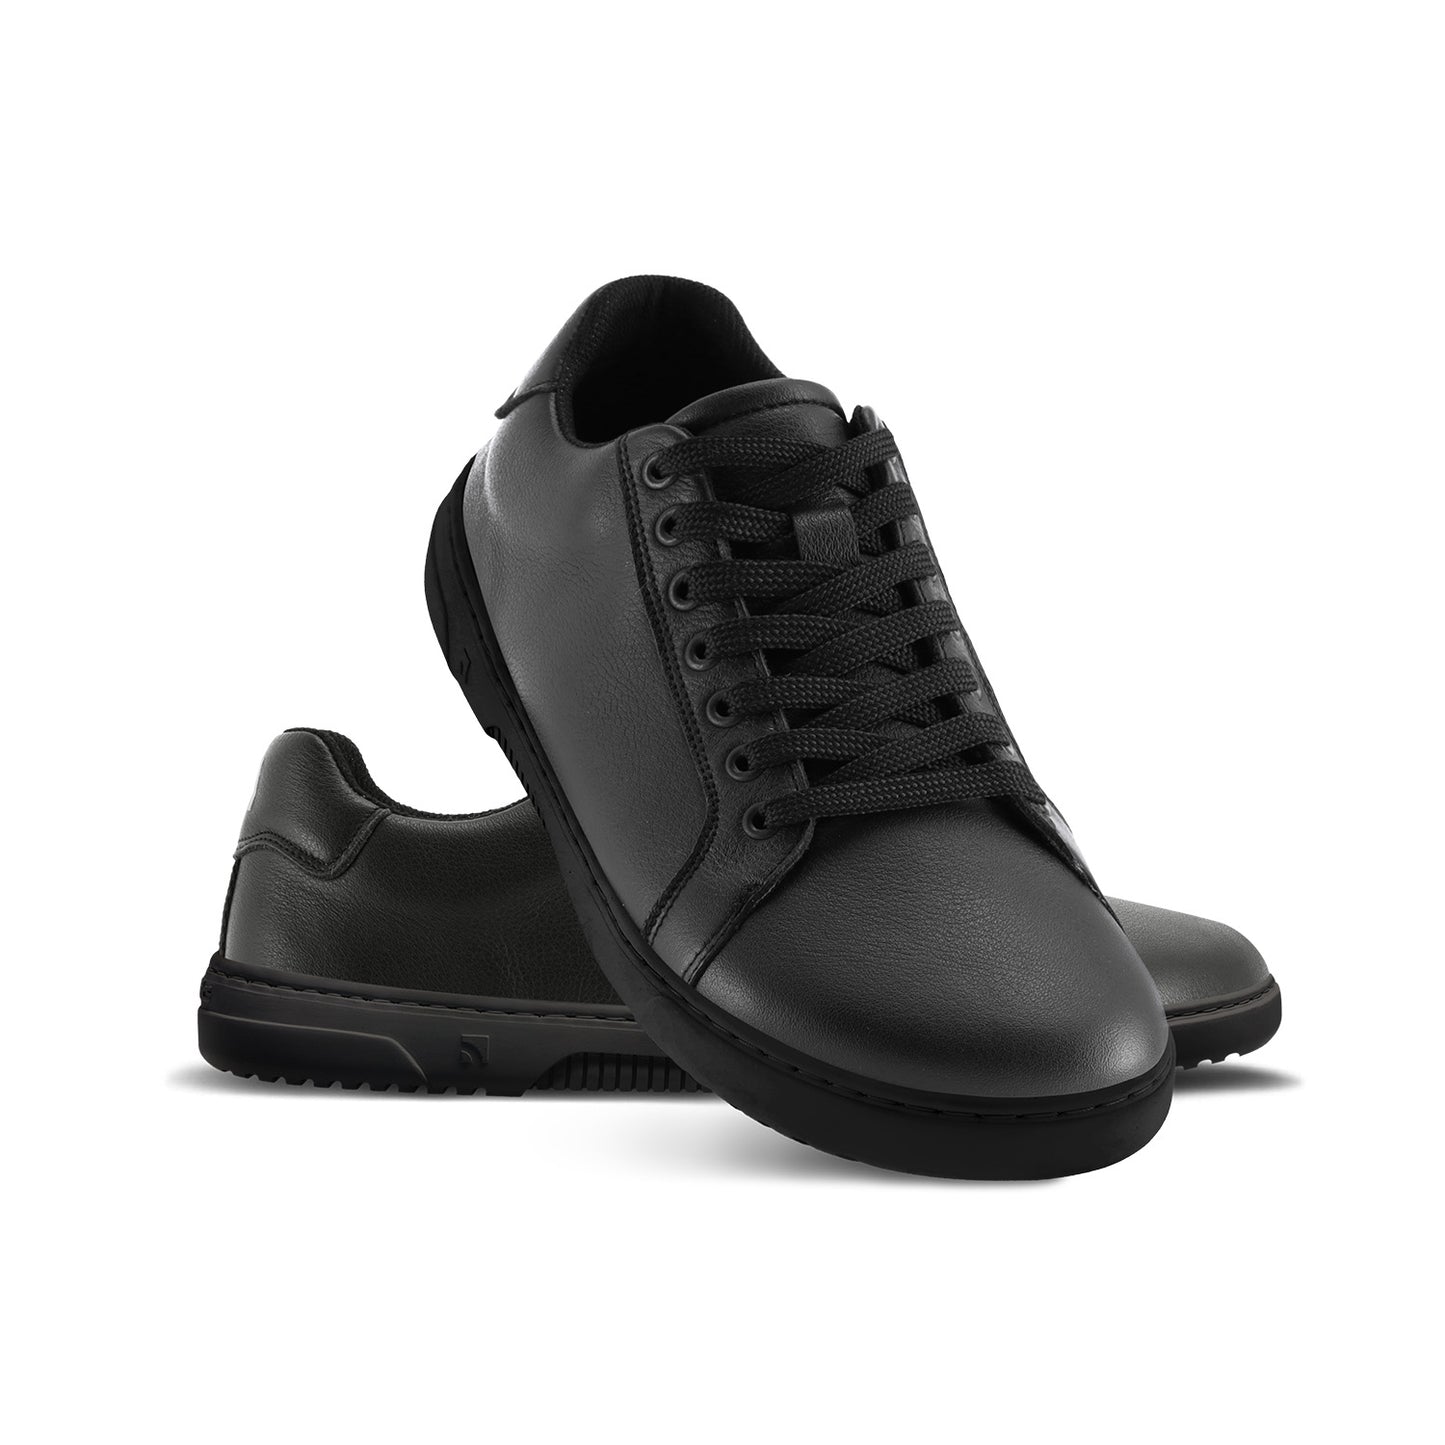 Zapatos Descalzos - Hombre - Piel Natural - Negro - Las Zapatillas